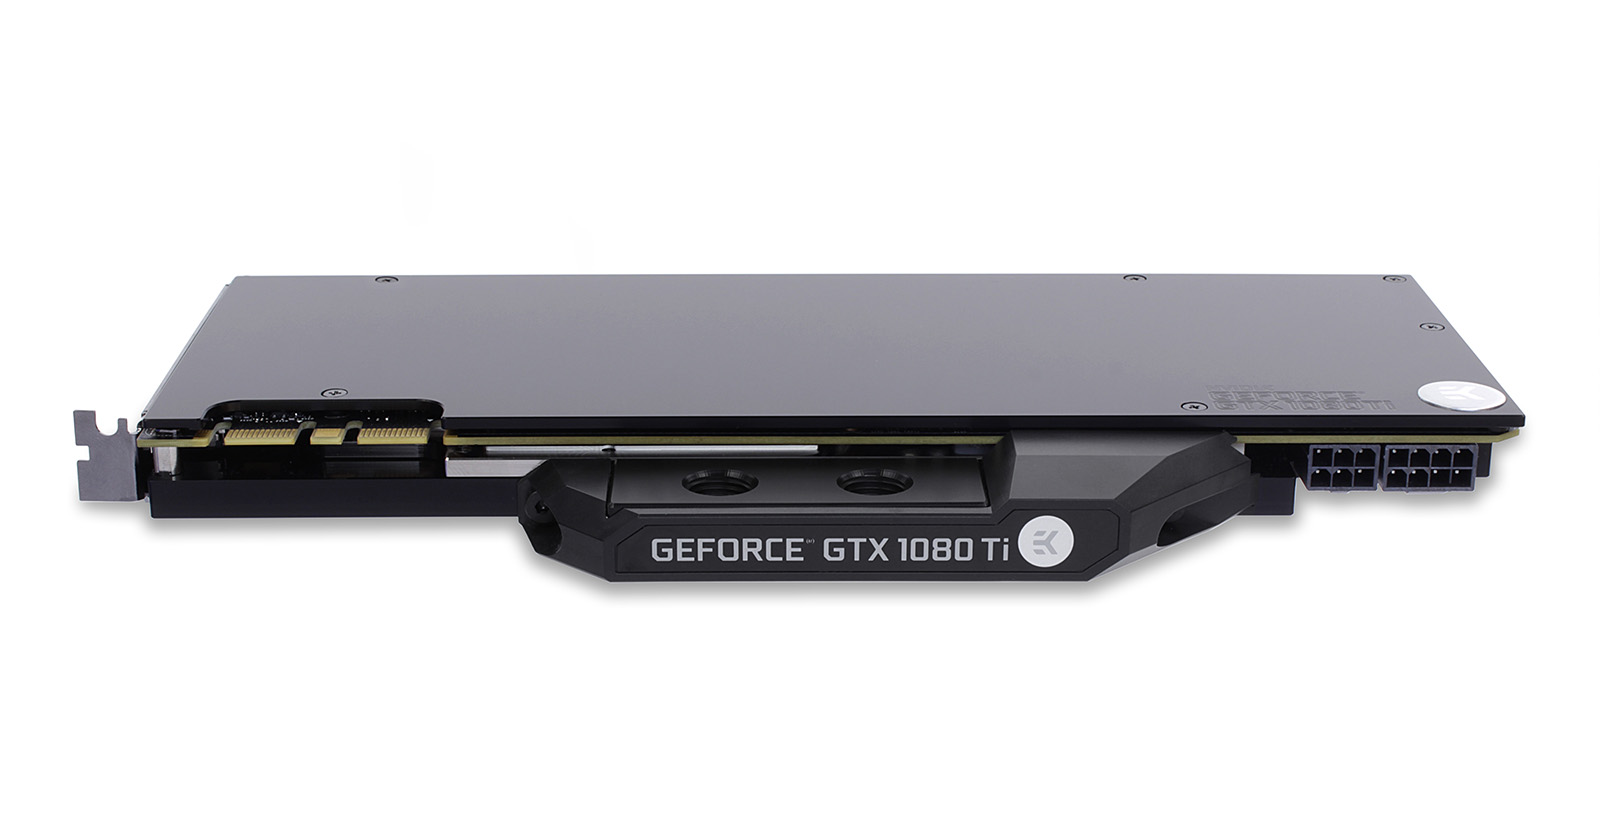 EK is releasing Full-Cover water blocks for NVIDIA® GeForce® GTX 1080 Ti graphics cards